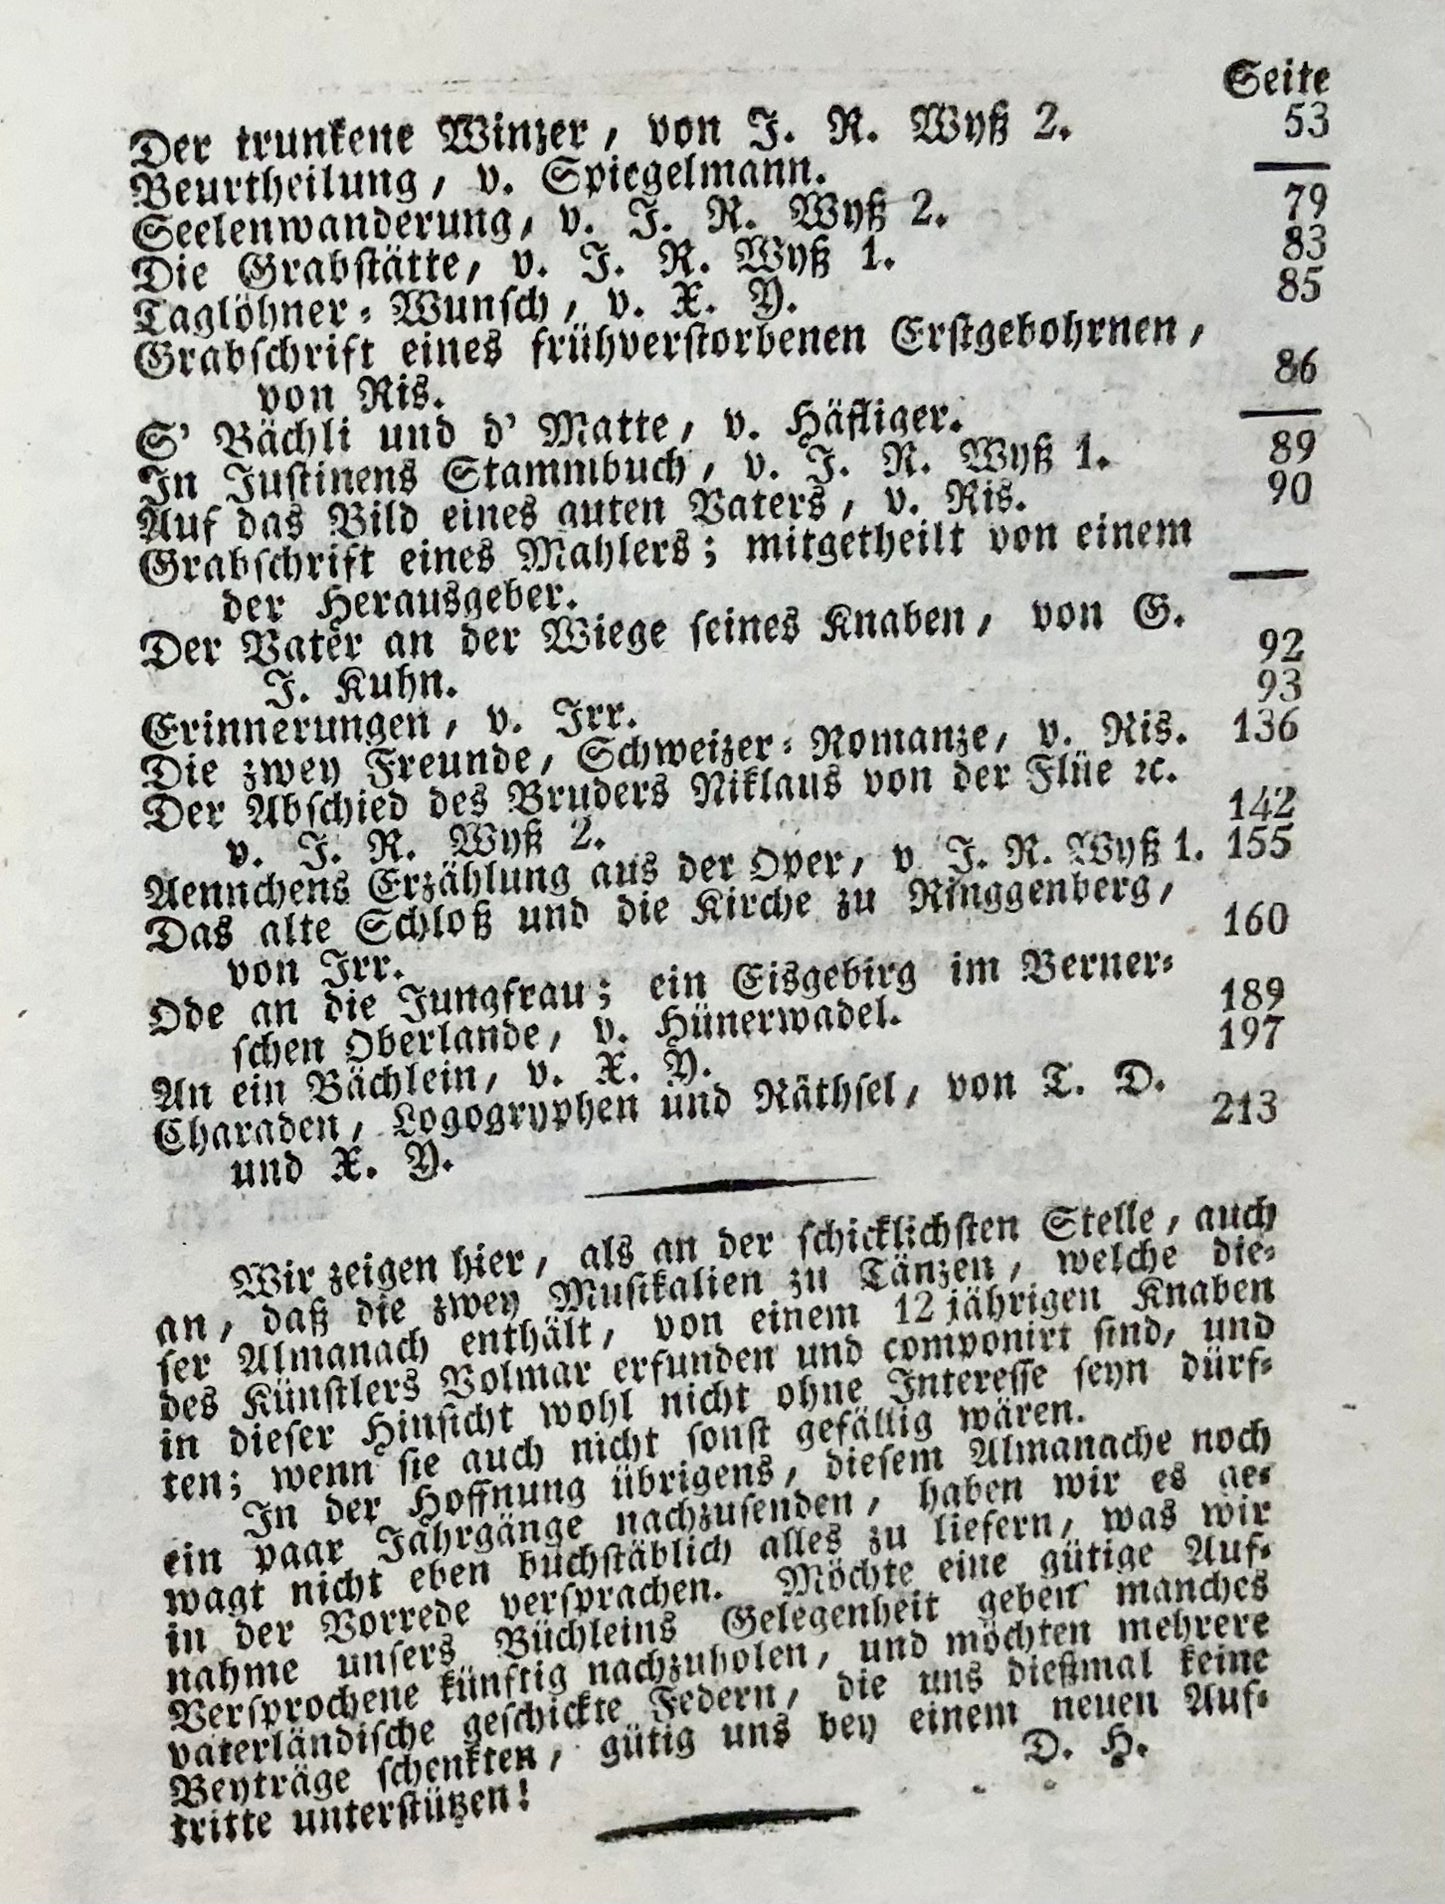 1811 Robinsonade, Almanacco, Alpenrosen, Kuhn, Meisner, Wyss, 6 tavole, 2 notazioni musicali, letteratura, Svizzera